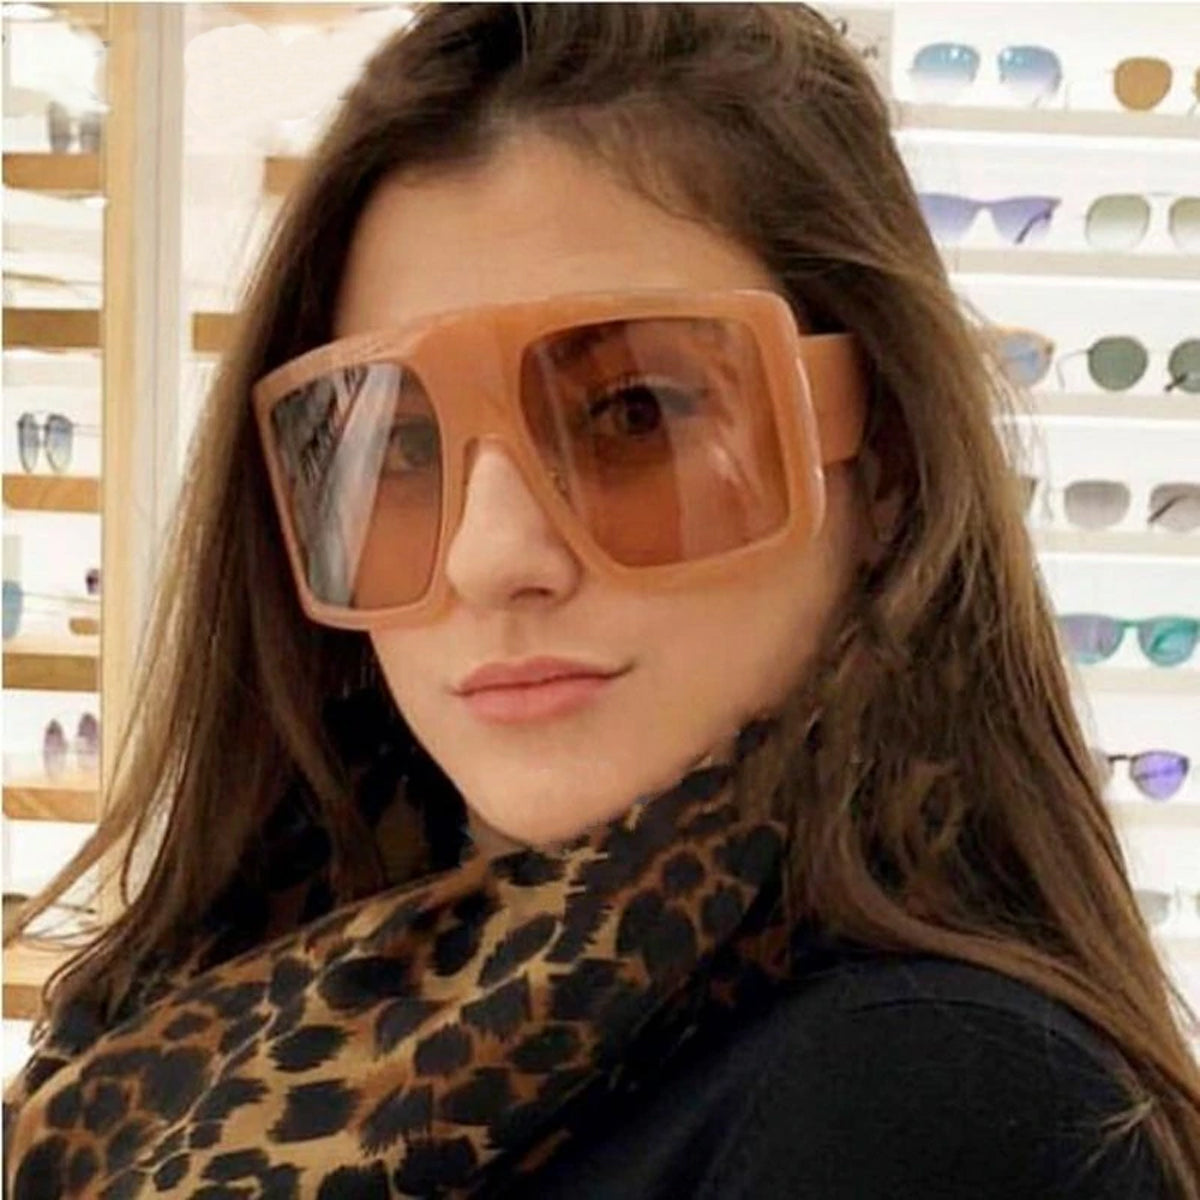 Oversized Briony Sunglasses